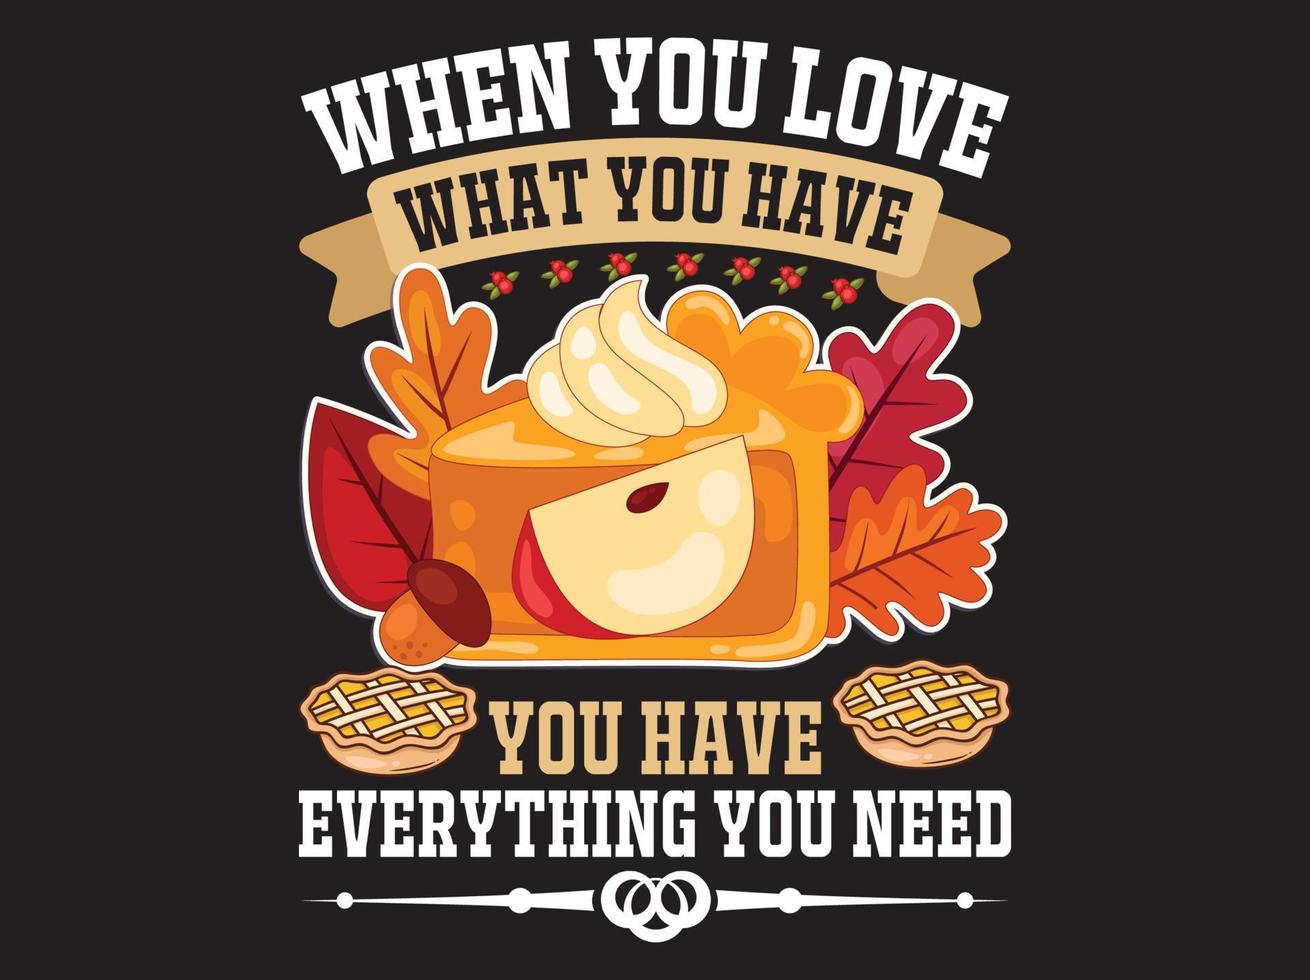 Thanksgiving t-shirt design vector file